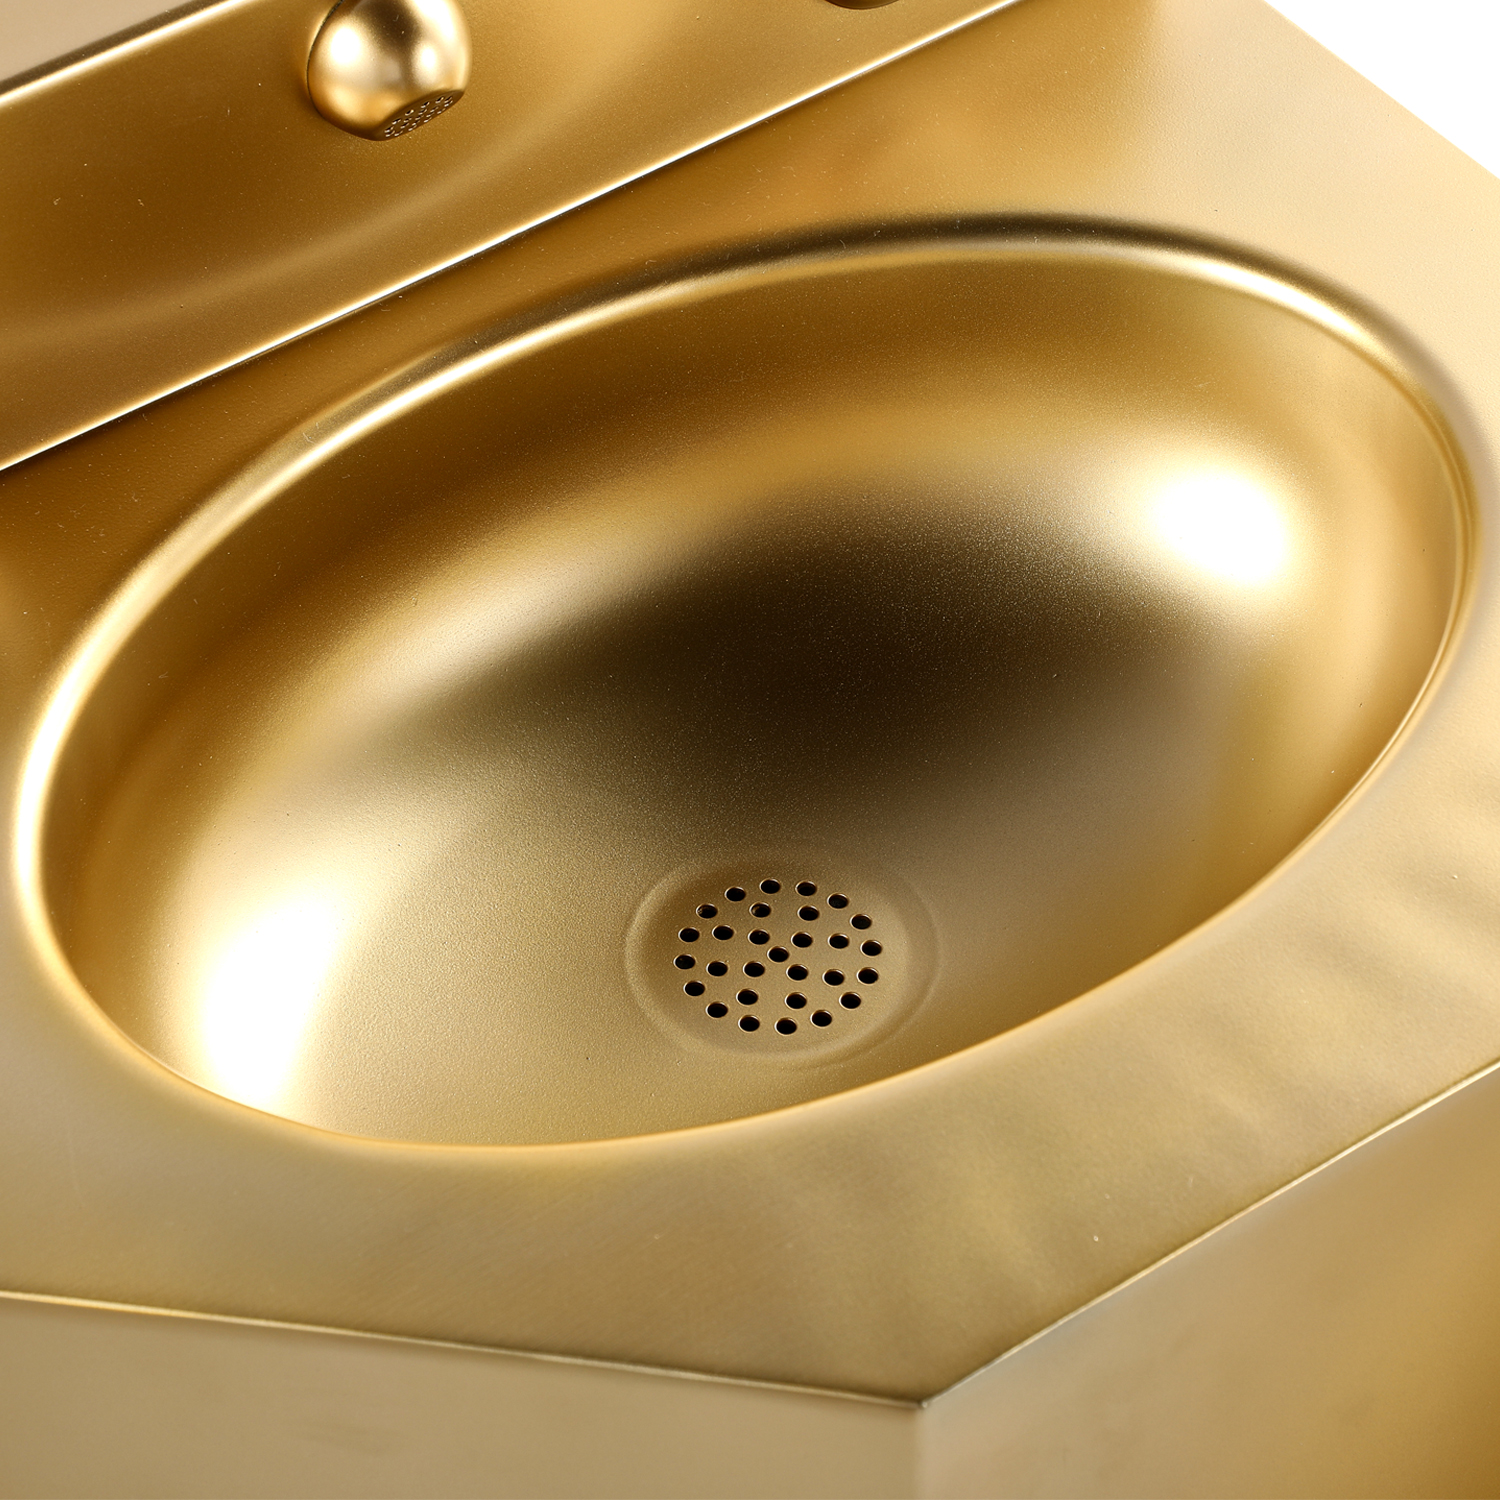 Golden Stainless Steel Combination Toilet